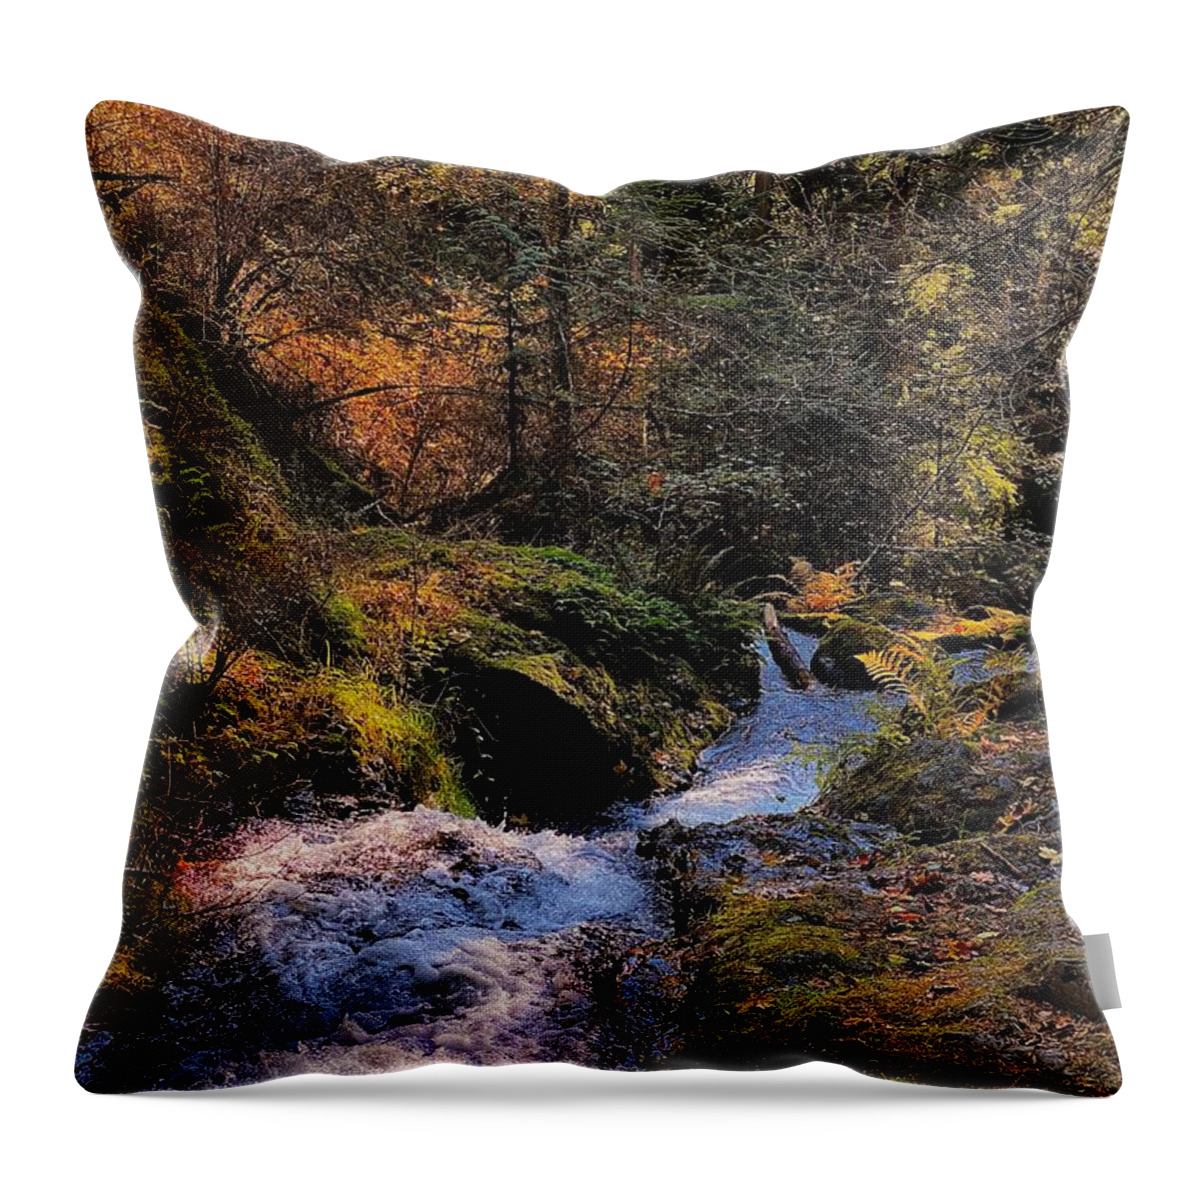 Waterfall Throw Pillow featuring the photograph Upper Cascade Waterfall - Orcas Island by Jerry Abbott